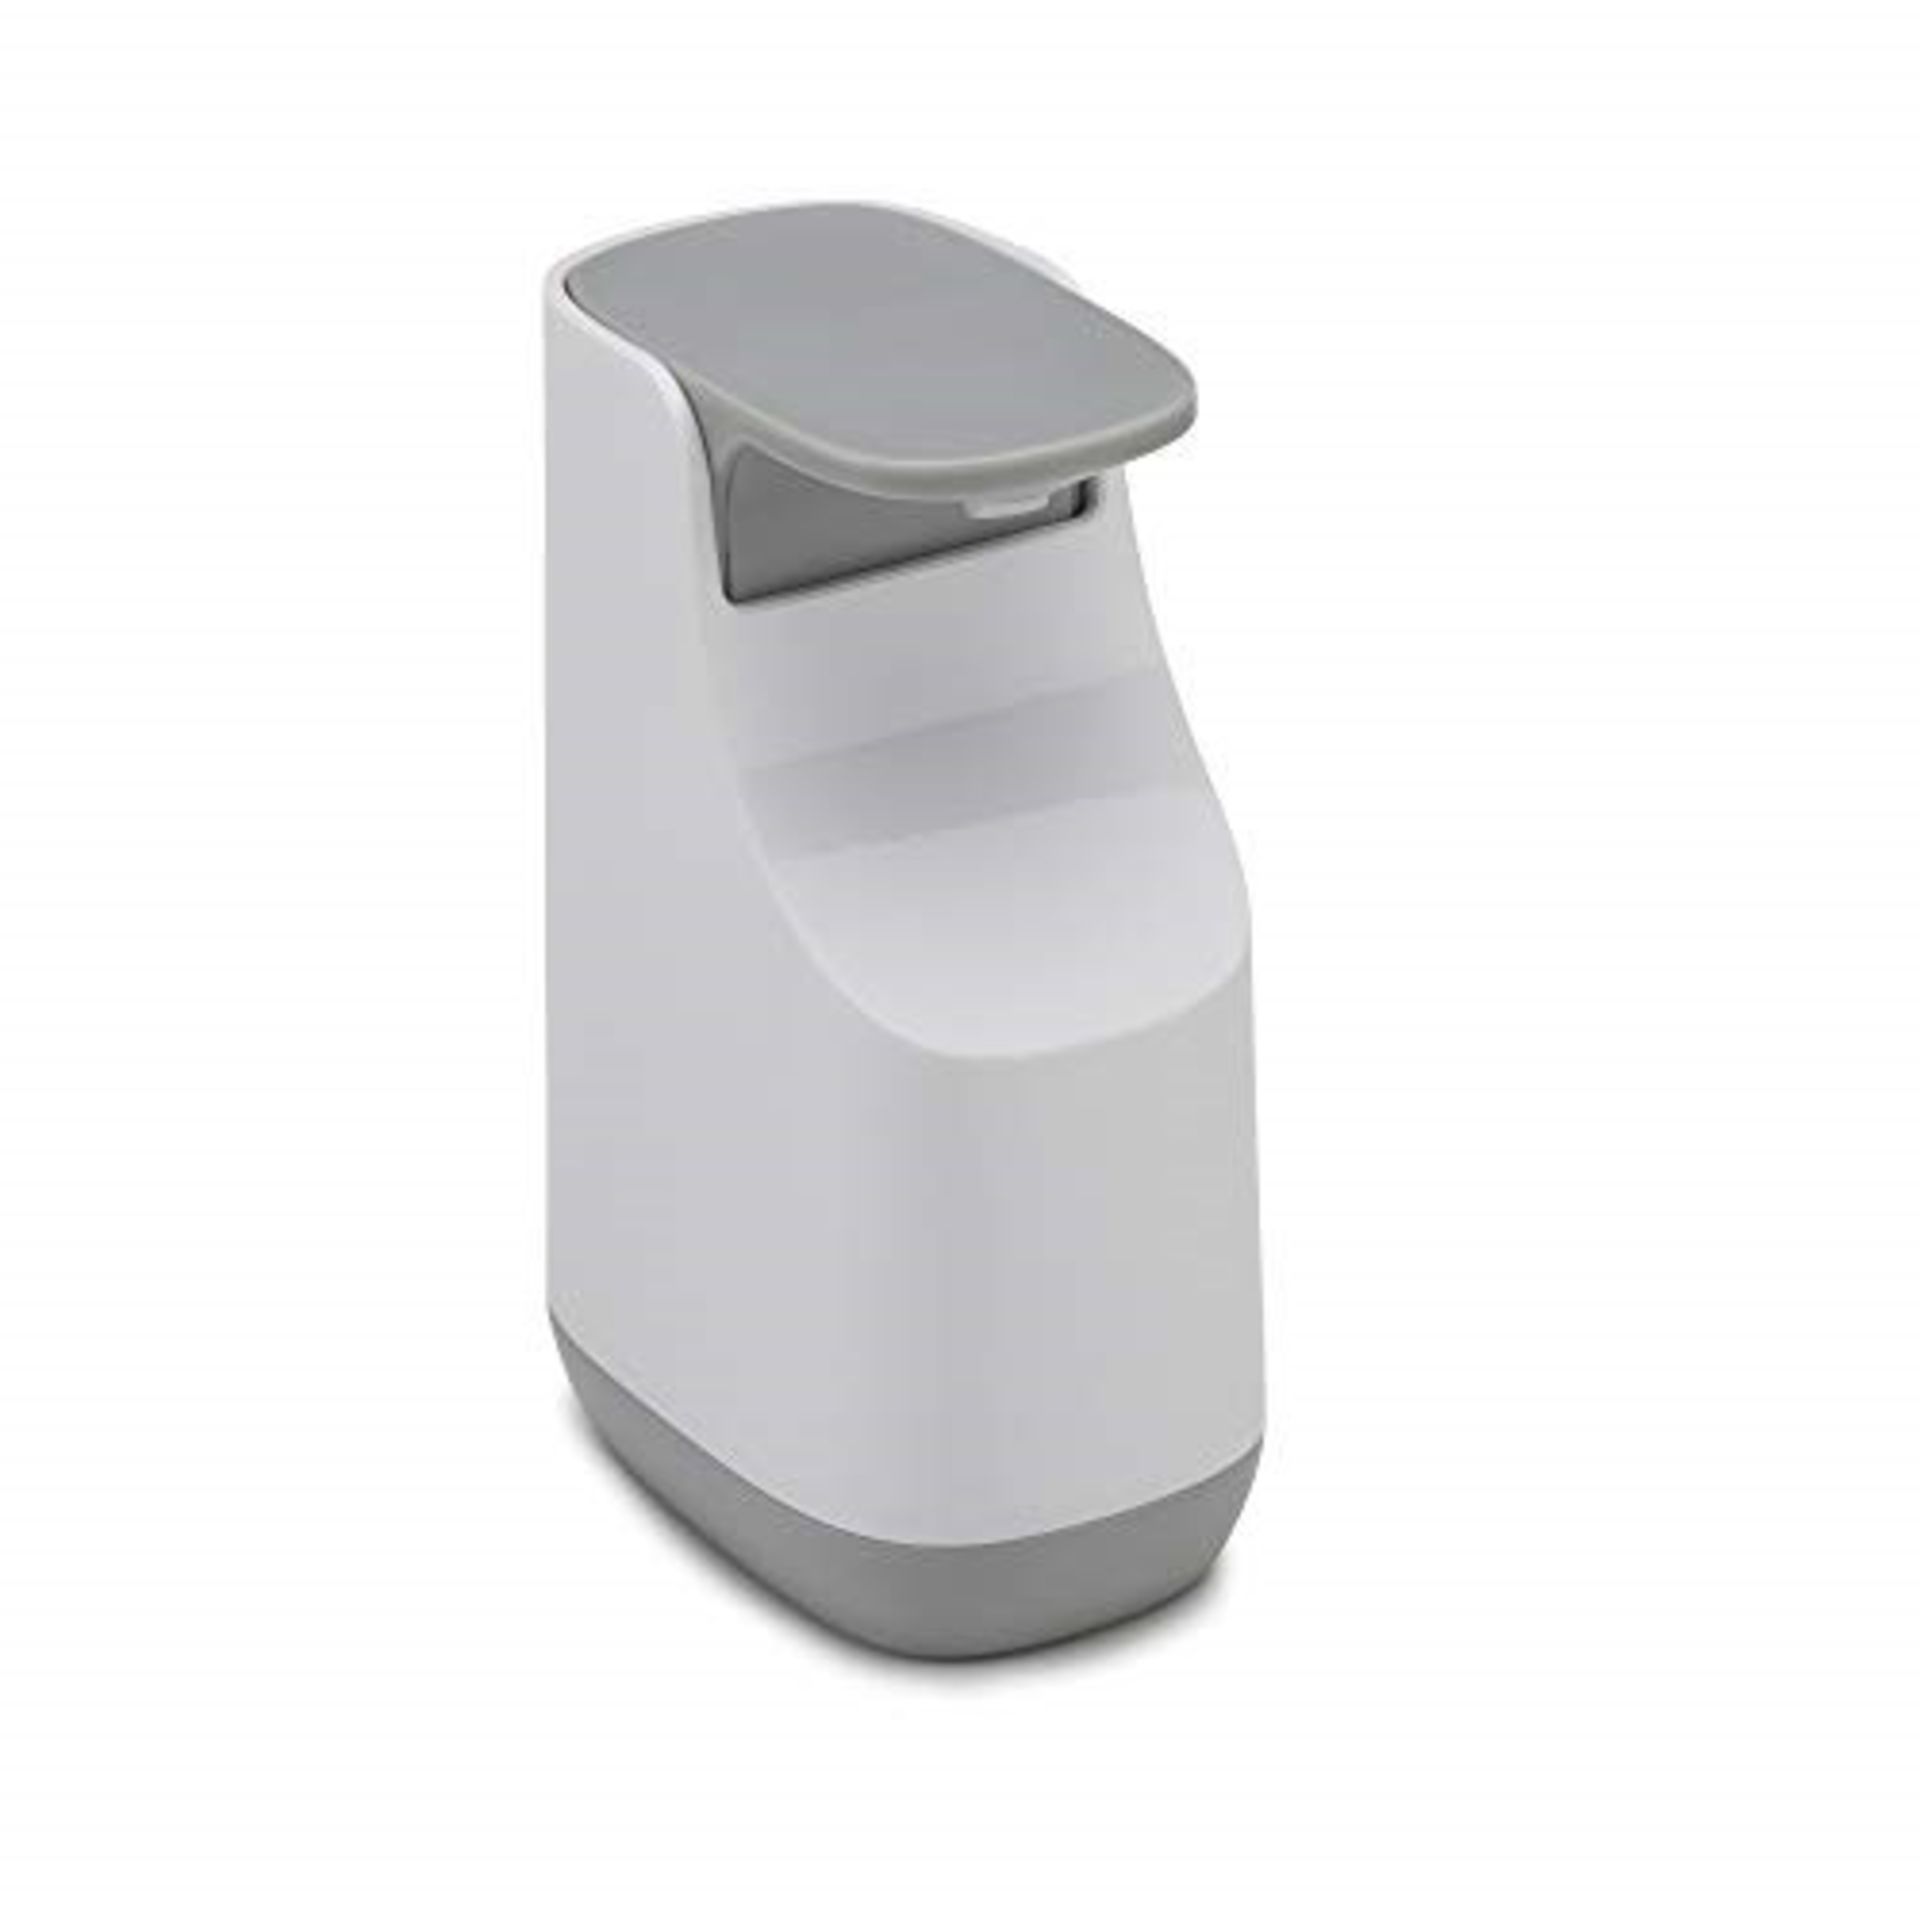 Joseph Joseph 70512 Bathroom Slim Compact Soap Dispenser- White/Grey , 6.2 x 14.1 x 9.